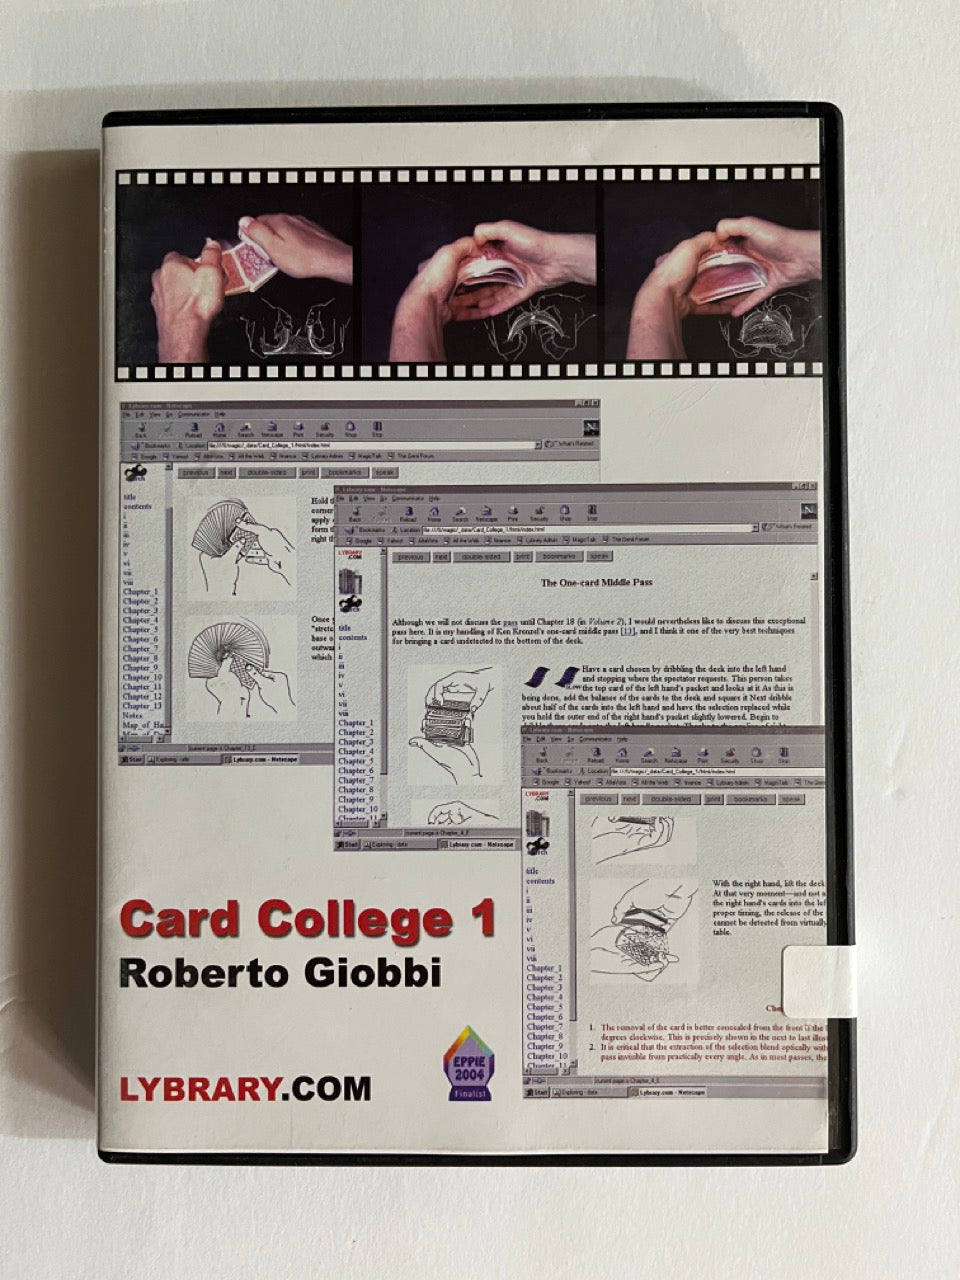 Card College 1 (e-Book on Disc) - Roberto Giobbi/Lybrary.com